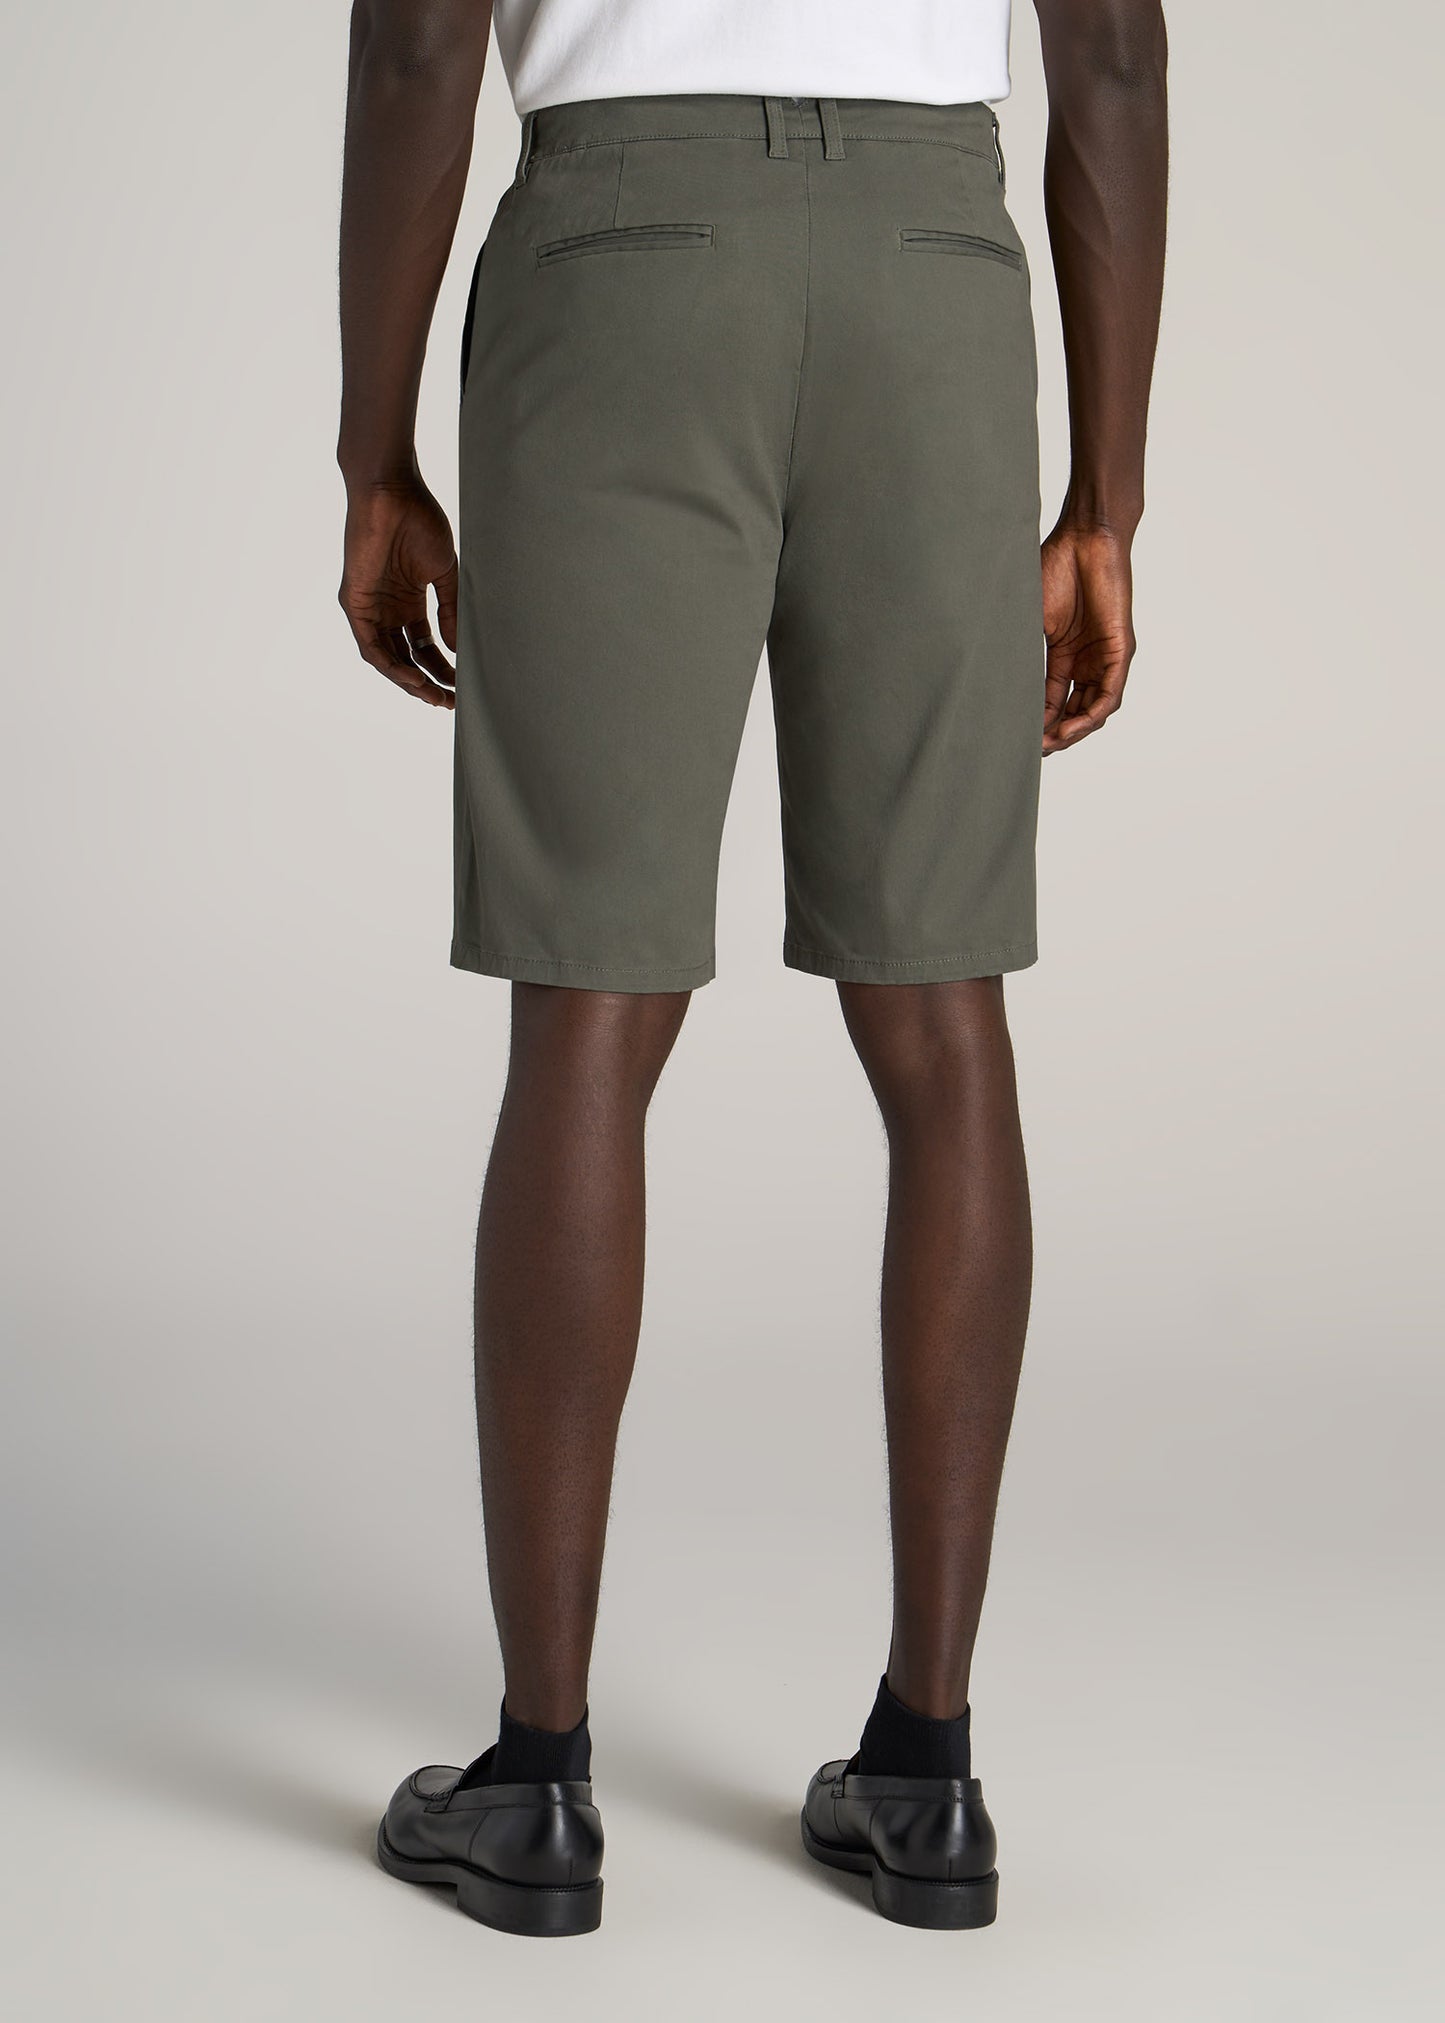 Chino Shorts (Short)